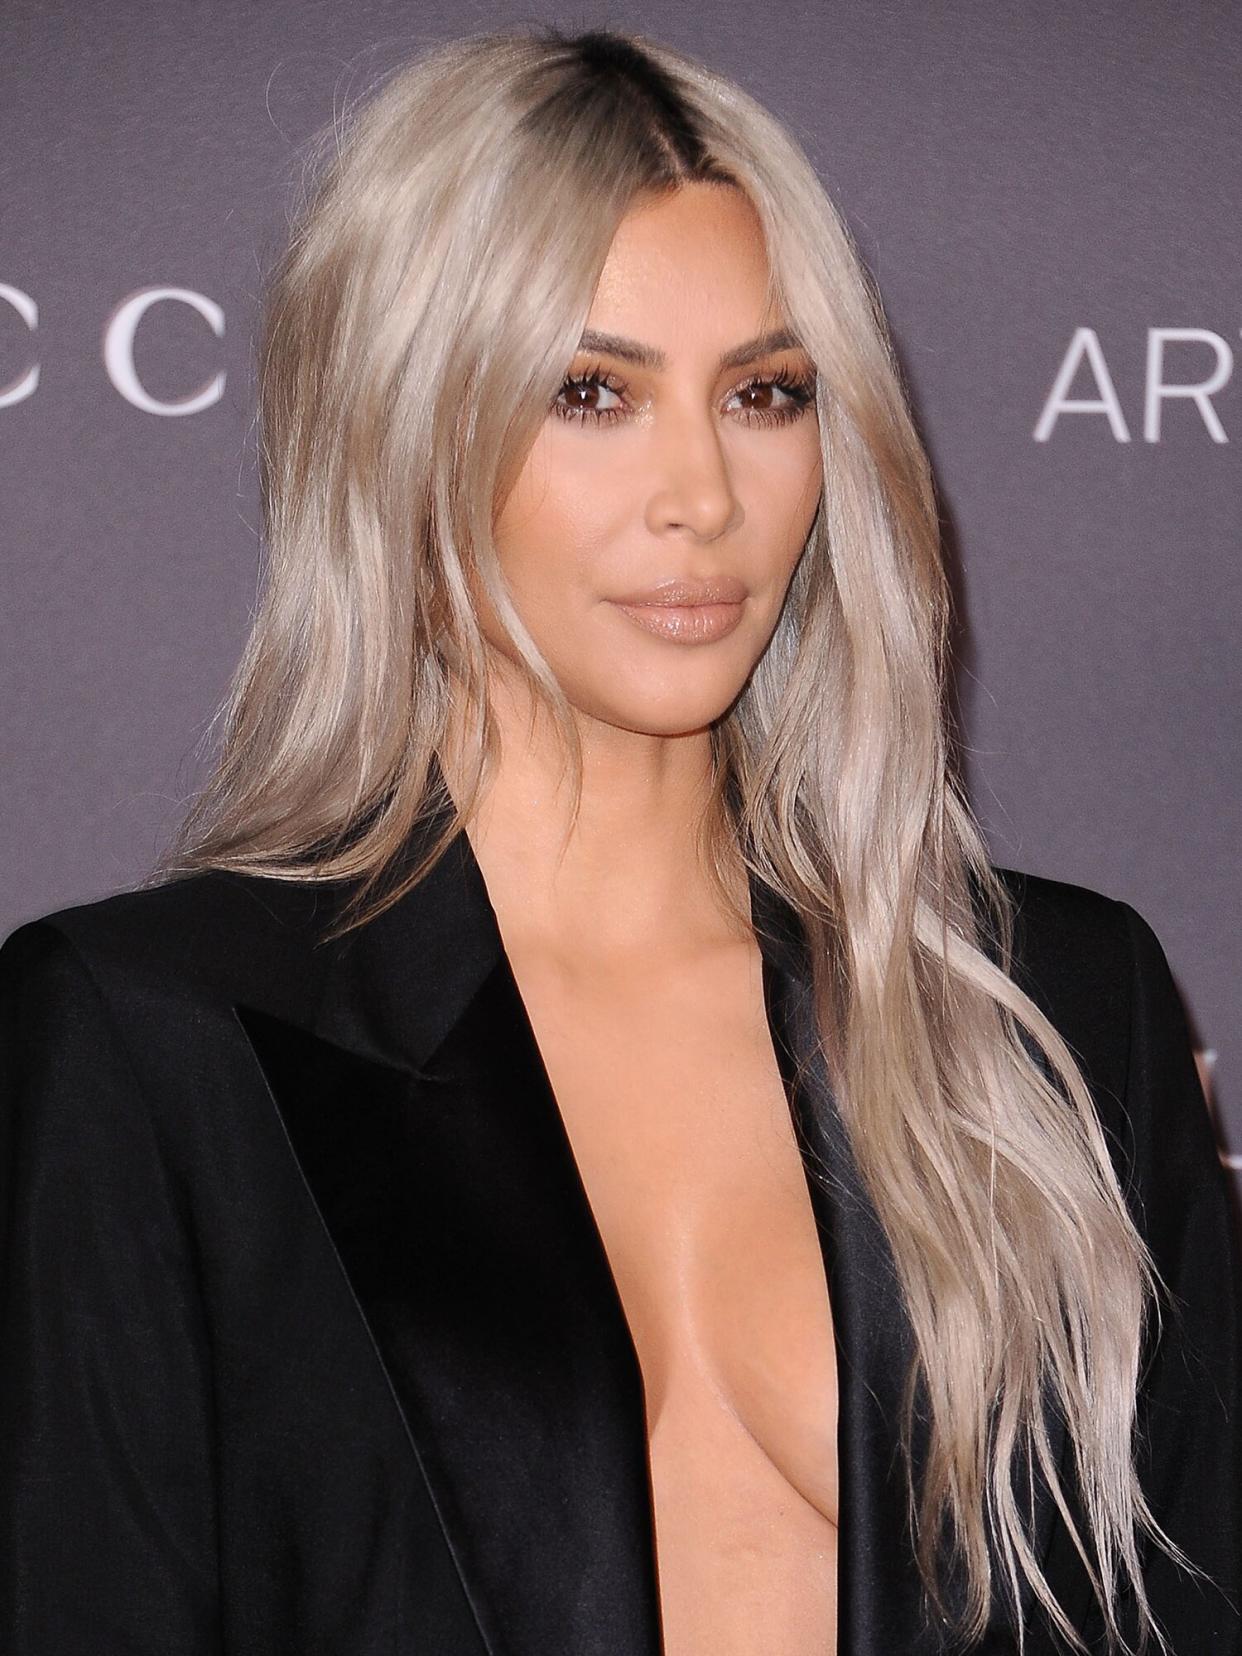 Kim Kardashian attends the 2017 LACMA Art + Film gala at LACMA on November 4, 2017 in Los Angeles, California